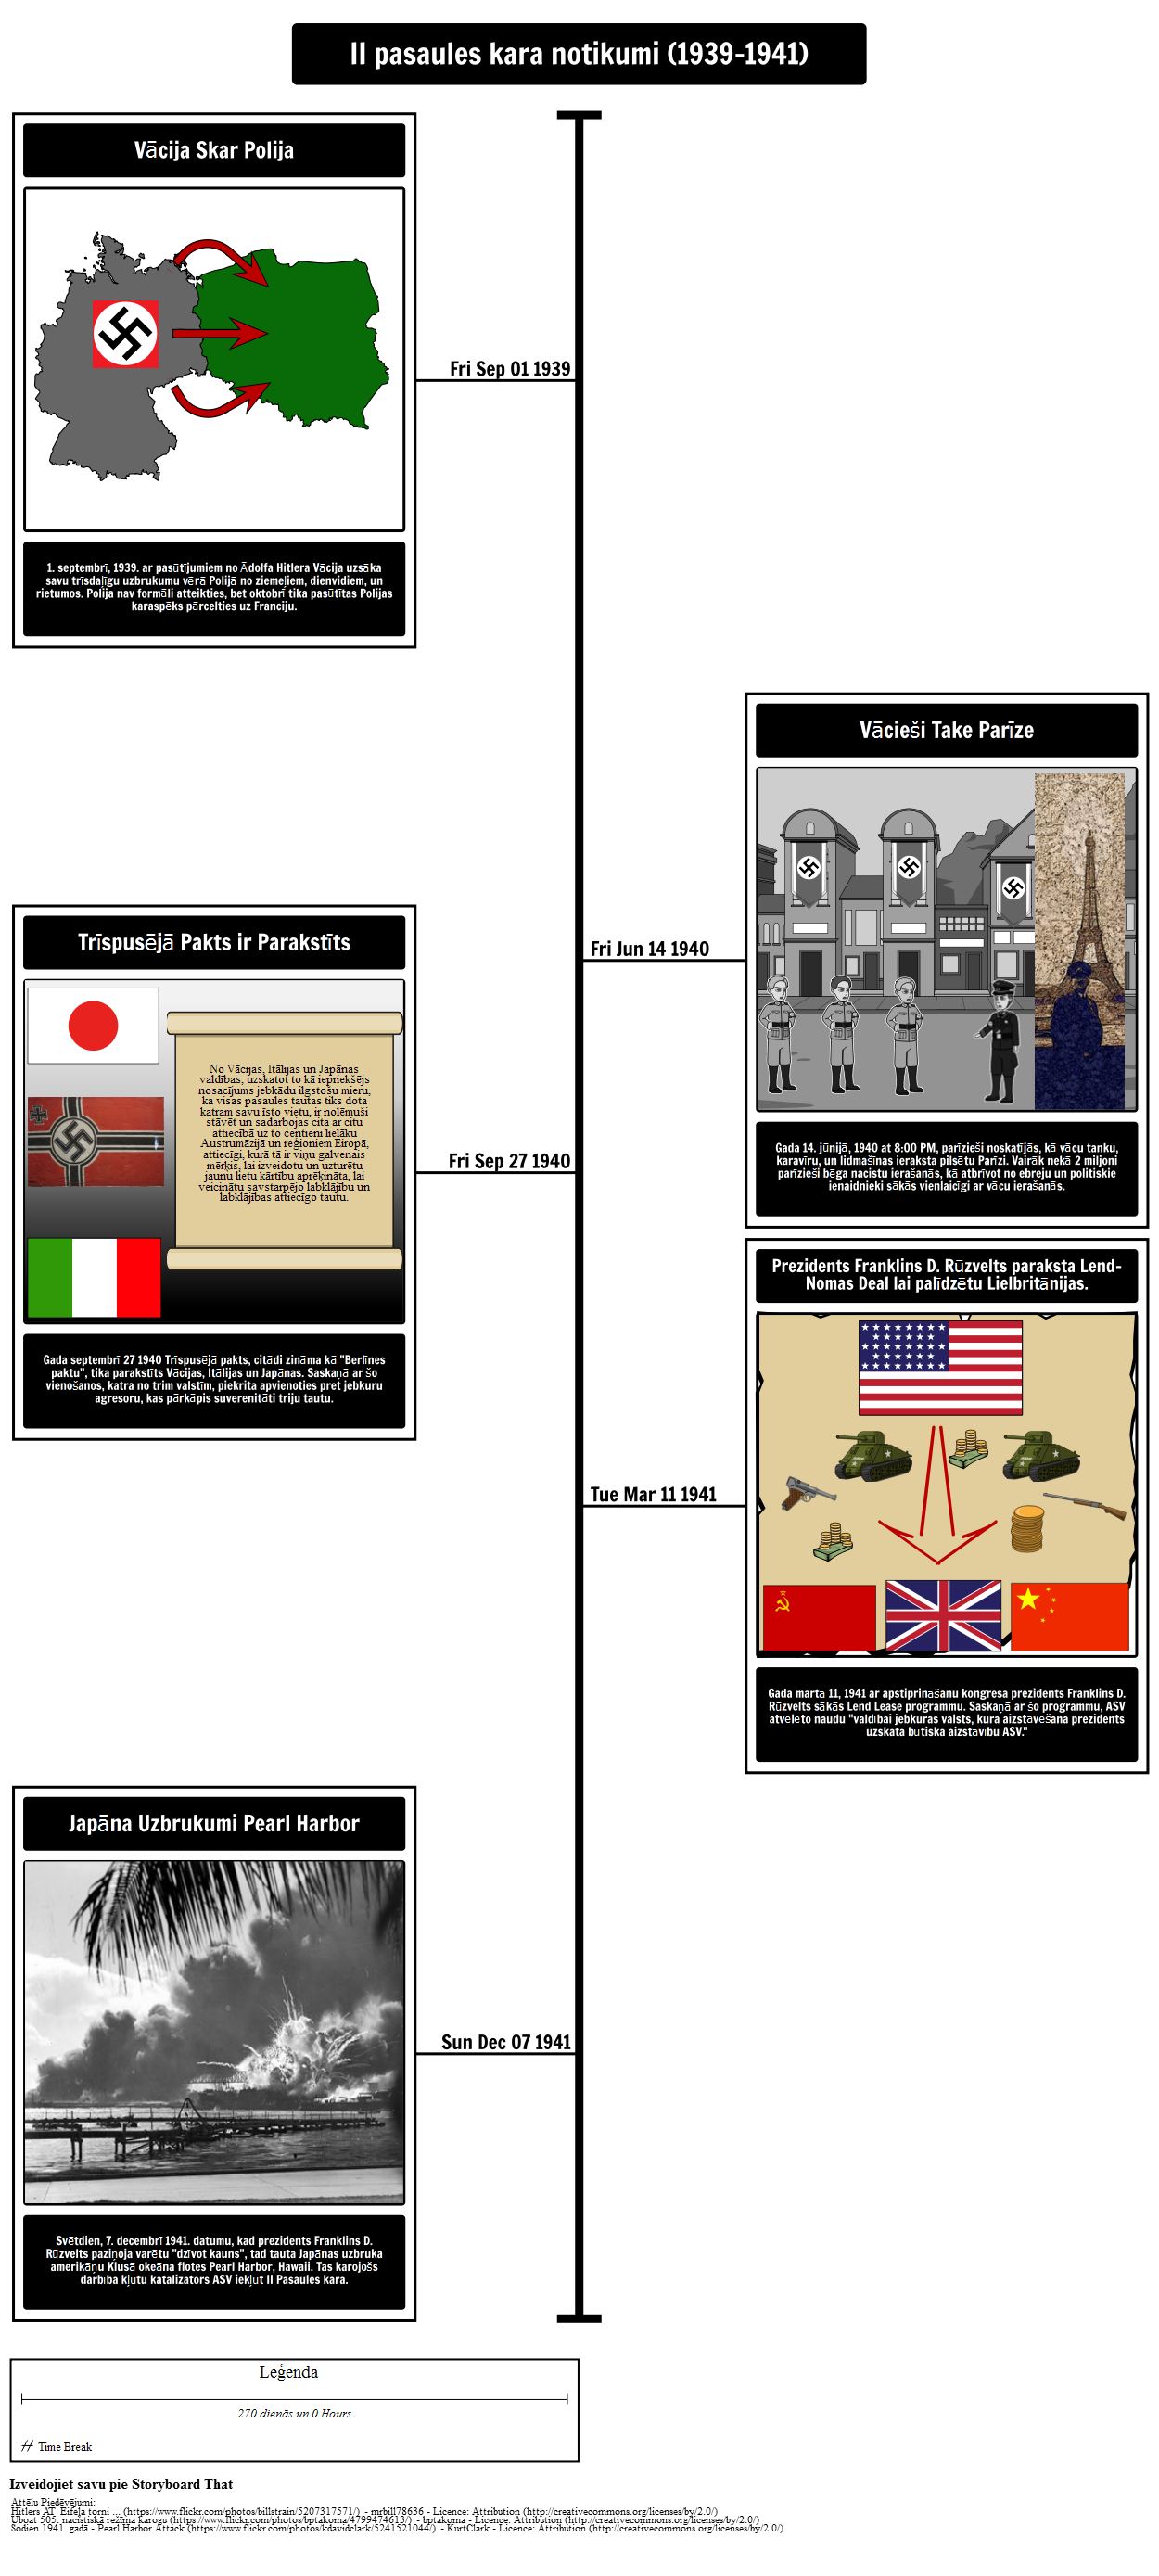 II pasaules kara Timeline 1939-1941